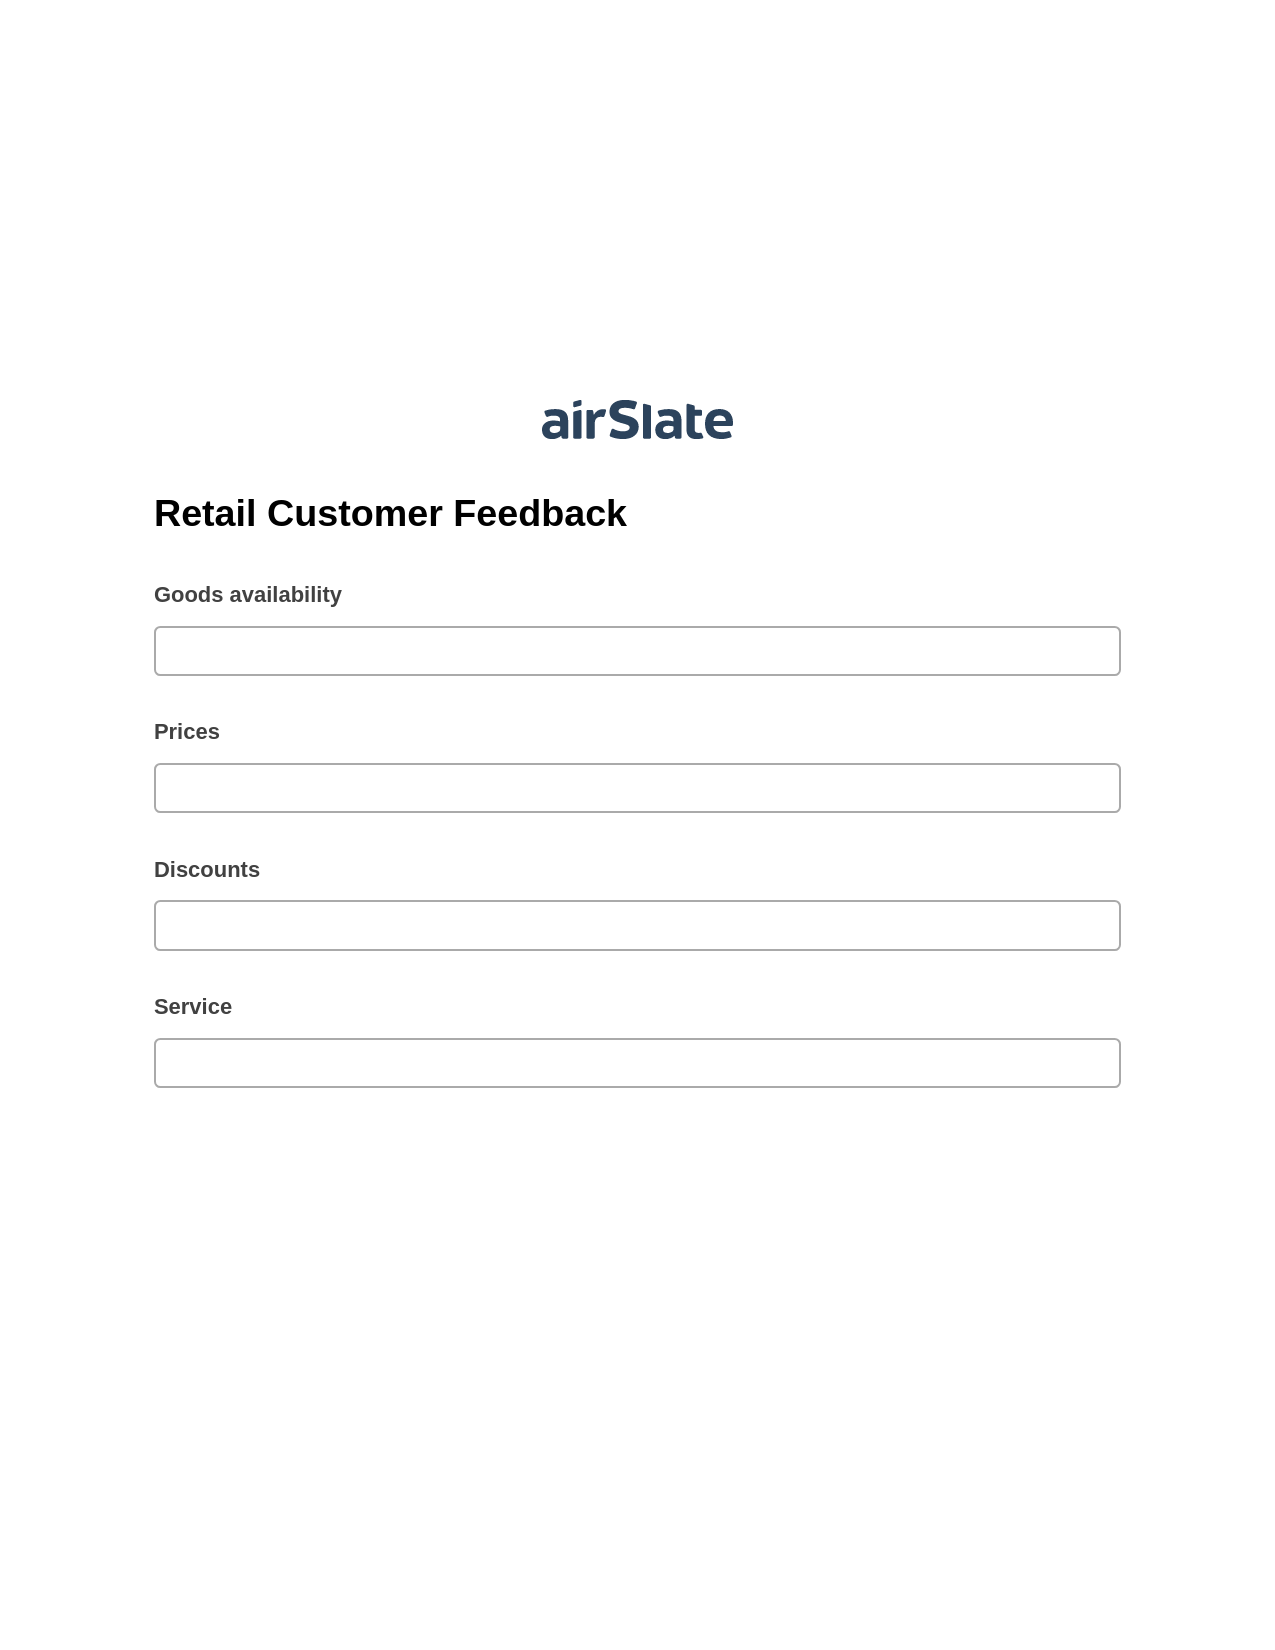 Retail Customer Feedback Pre-fill from CSV File Bot, Slack Notification Bot, Export to Smartsheet